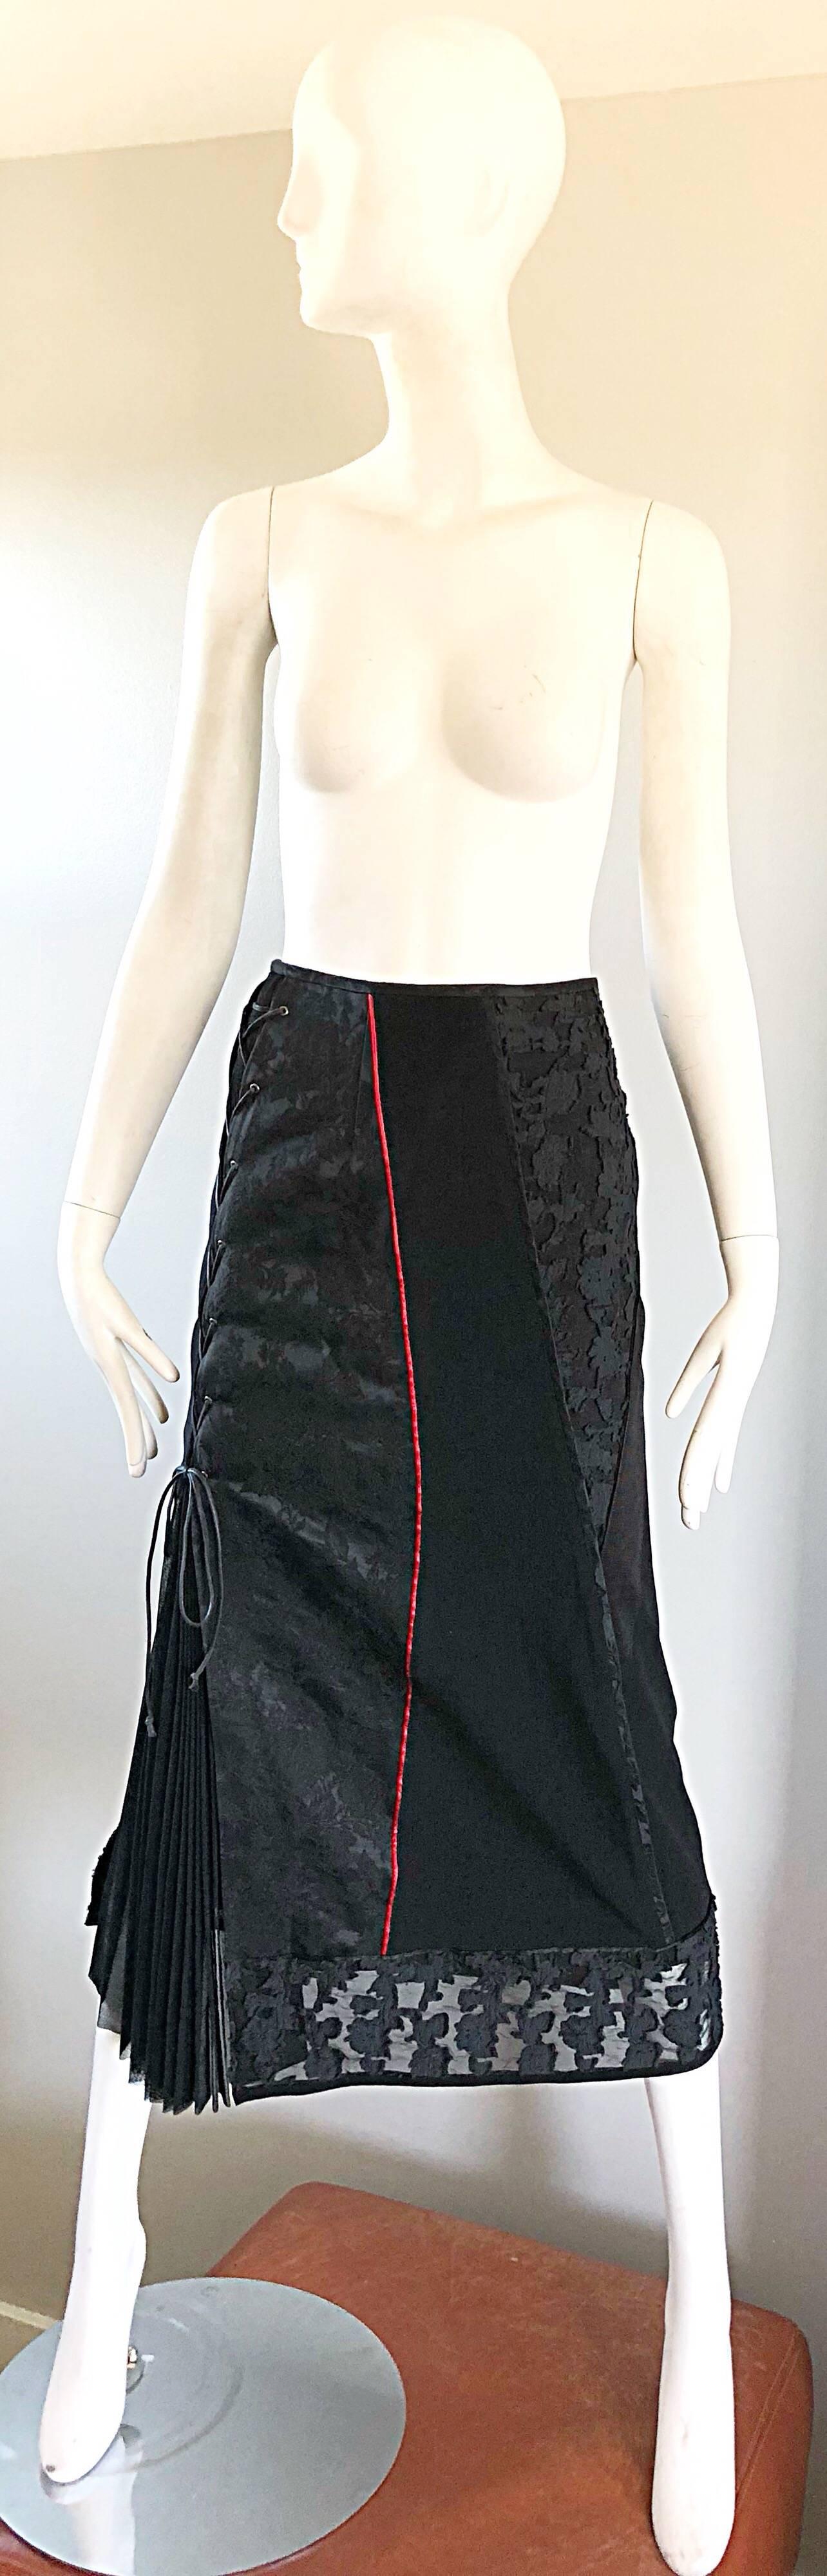 Rare Ritsuko Shirahama 1990s Black Lace Avant Garde Japanese Vintage 90s Skirt 5